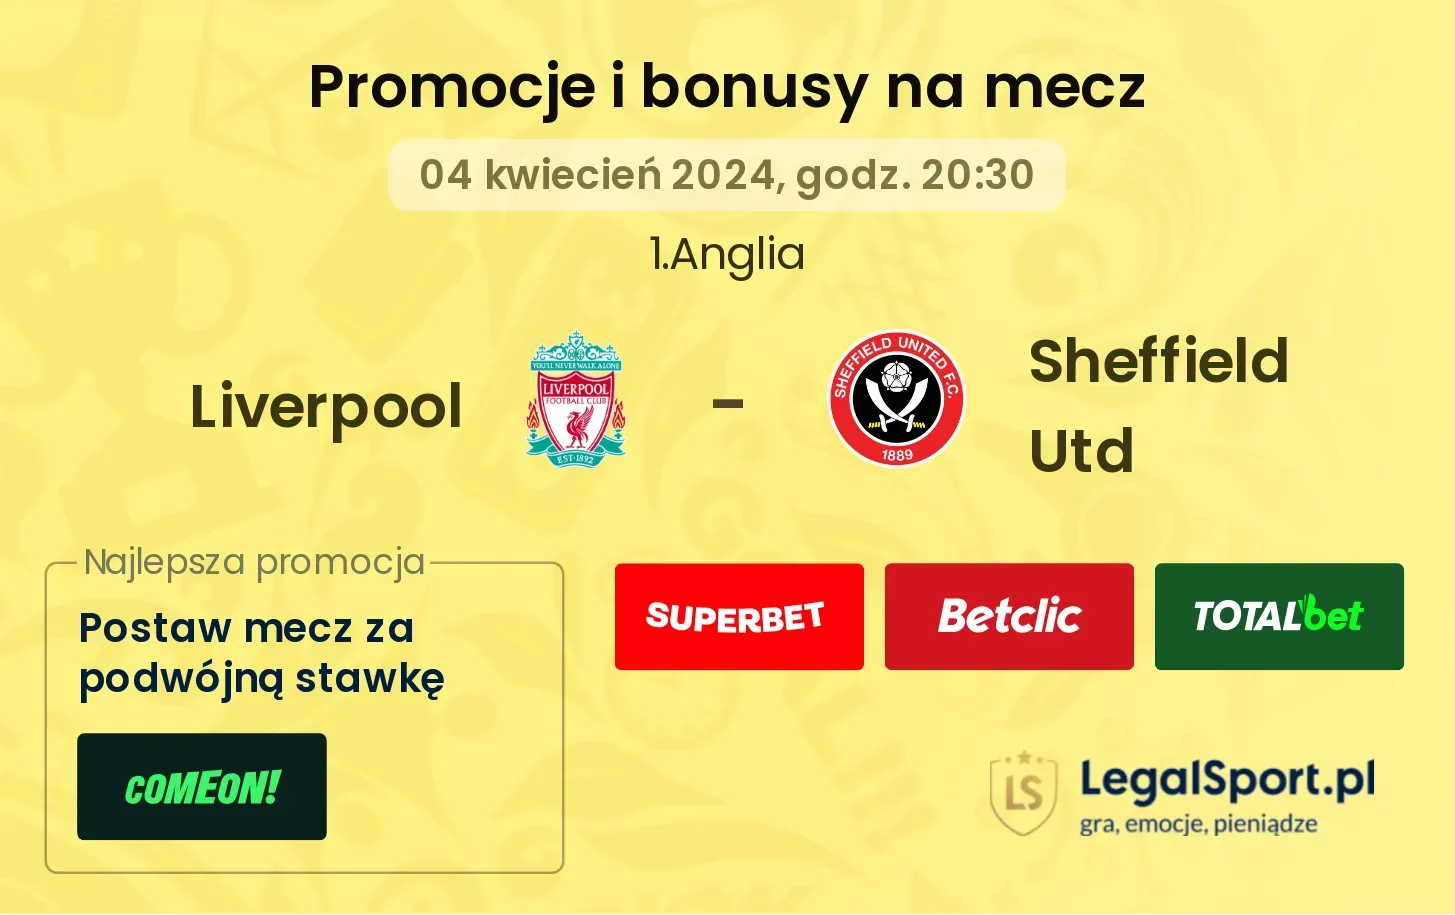 Liverpool - Sheffield Utd promocje bonusy na mecz